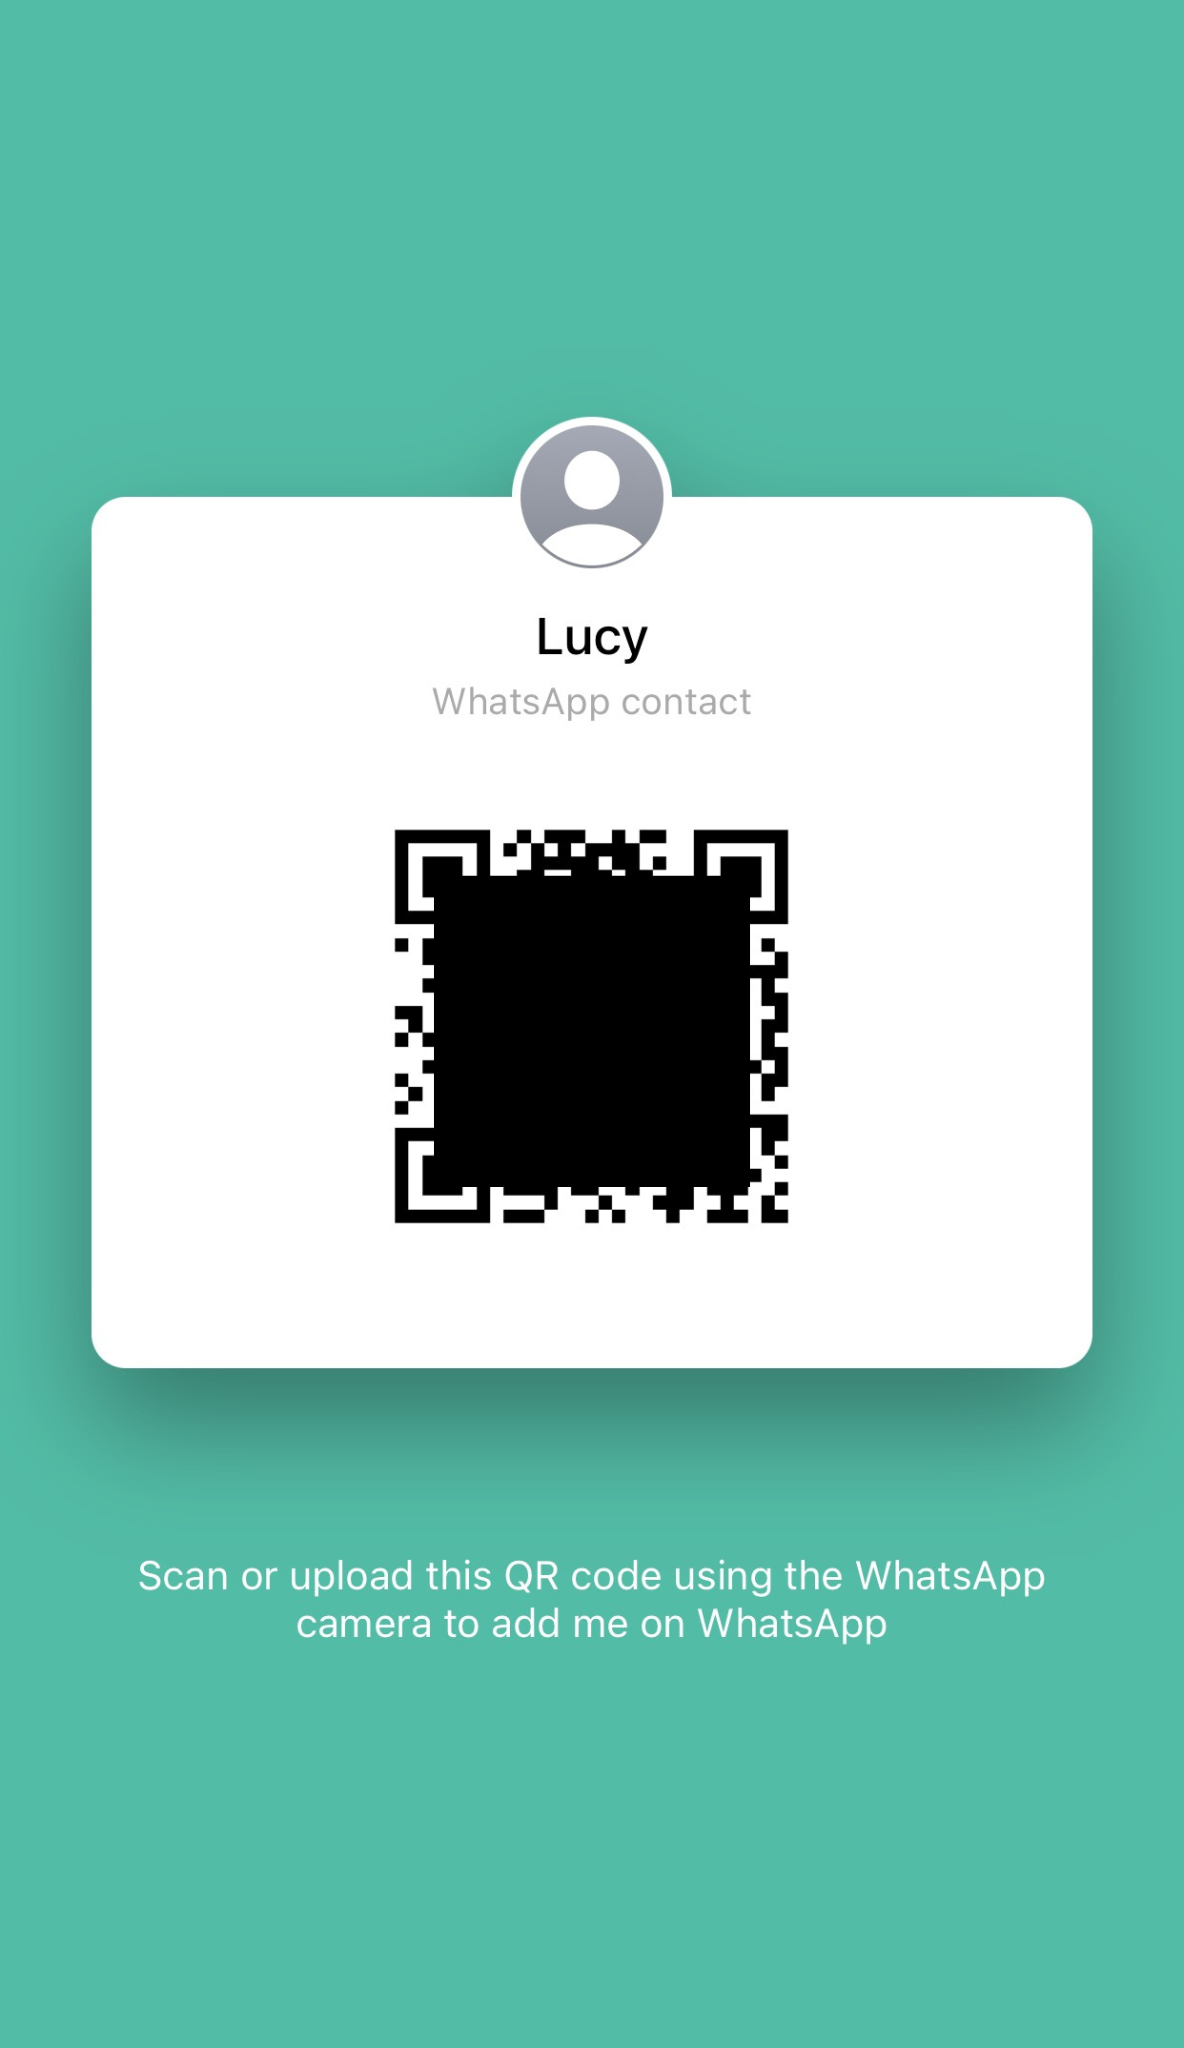 whatsapp qr code invite